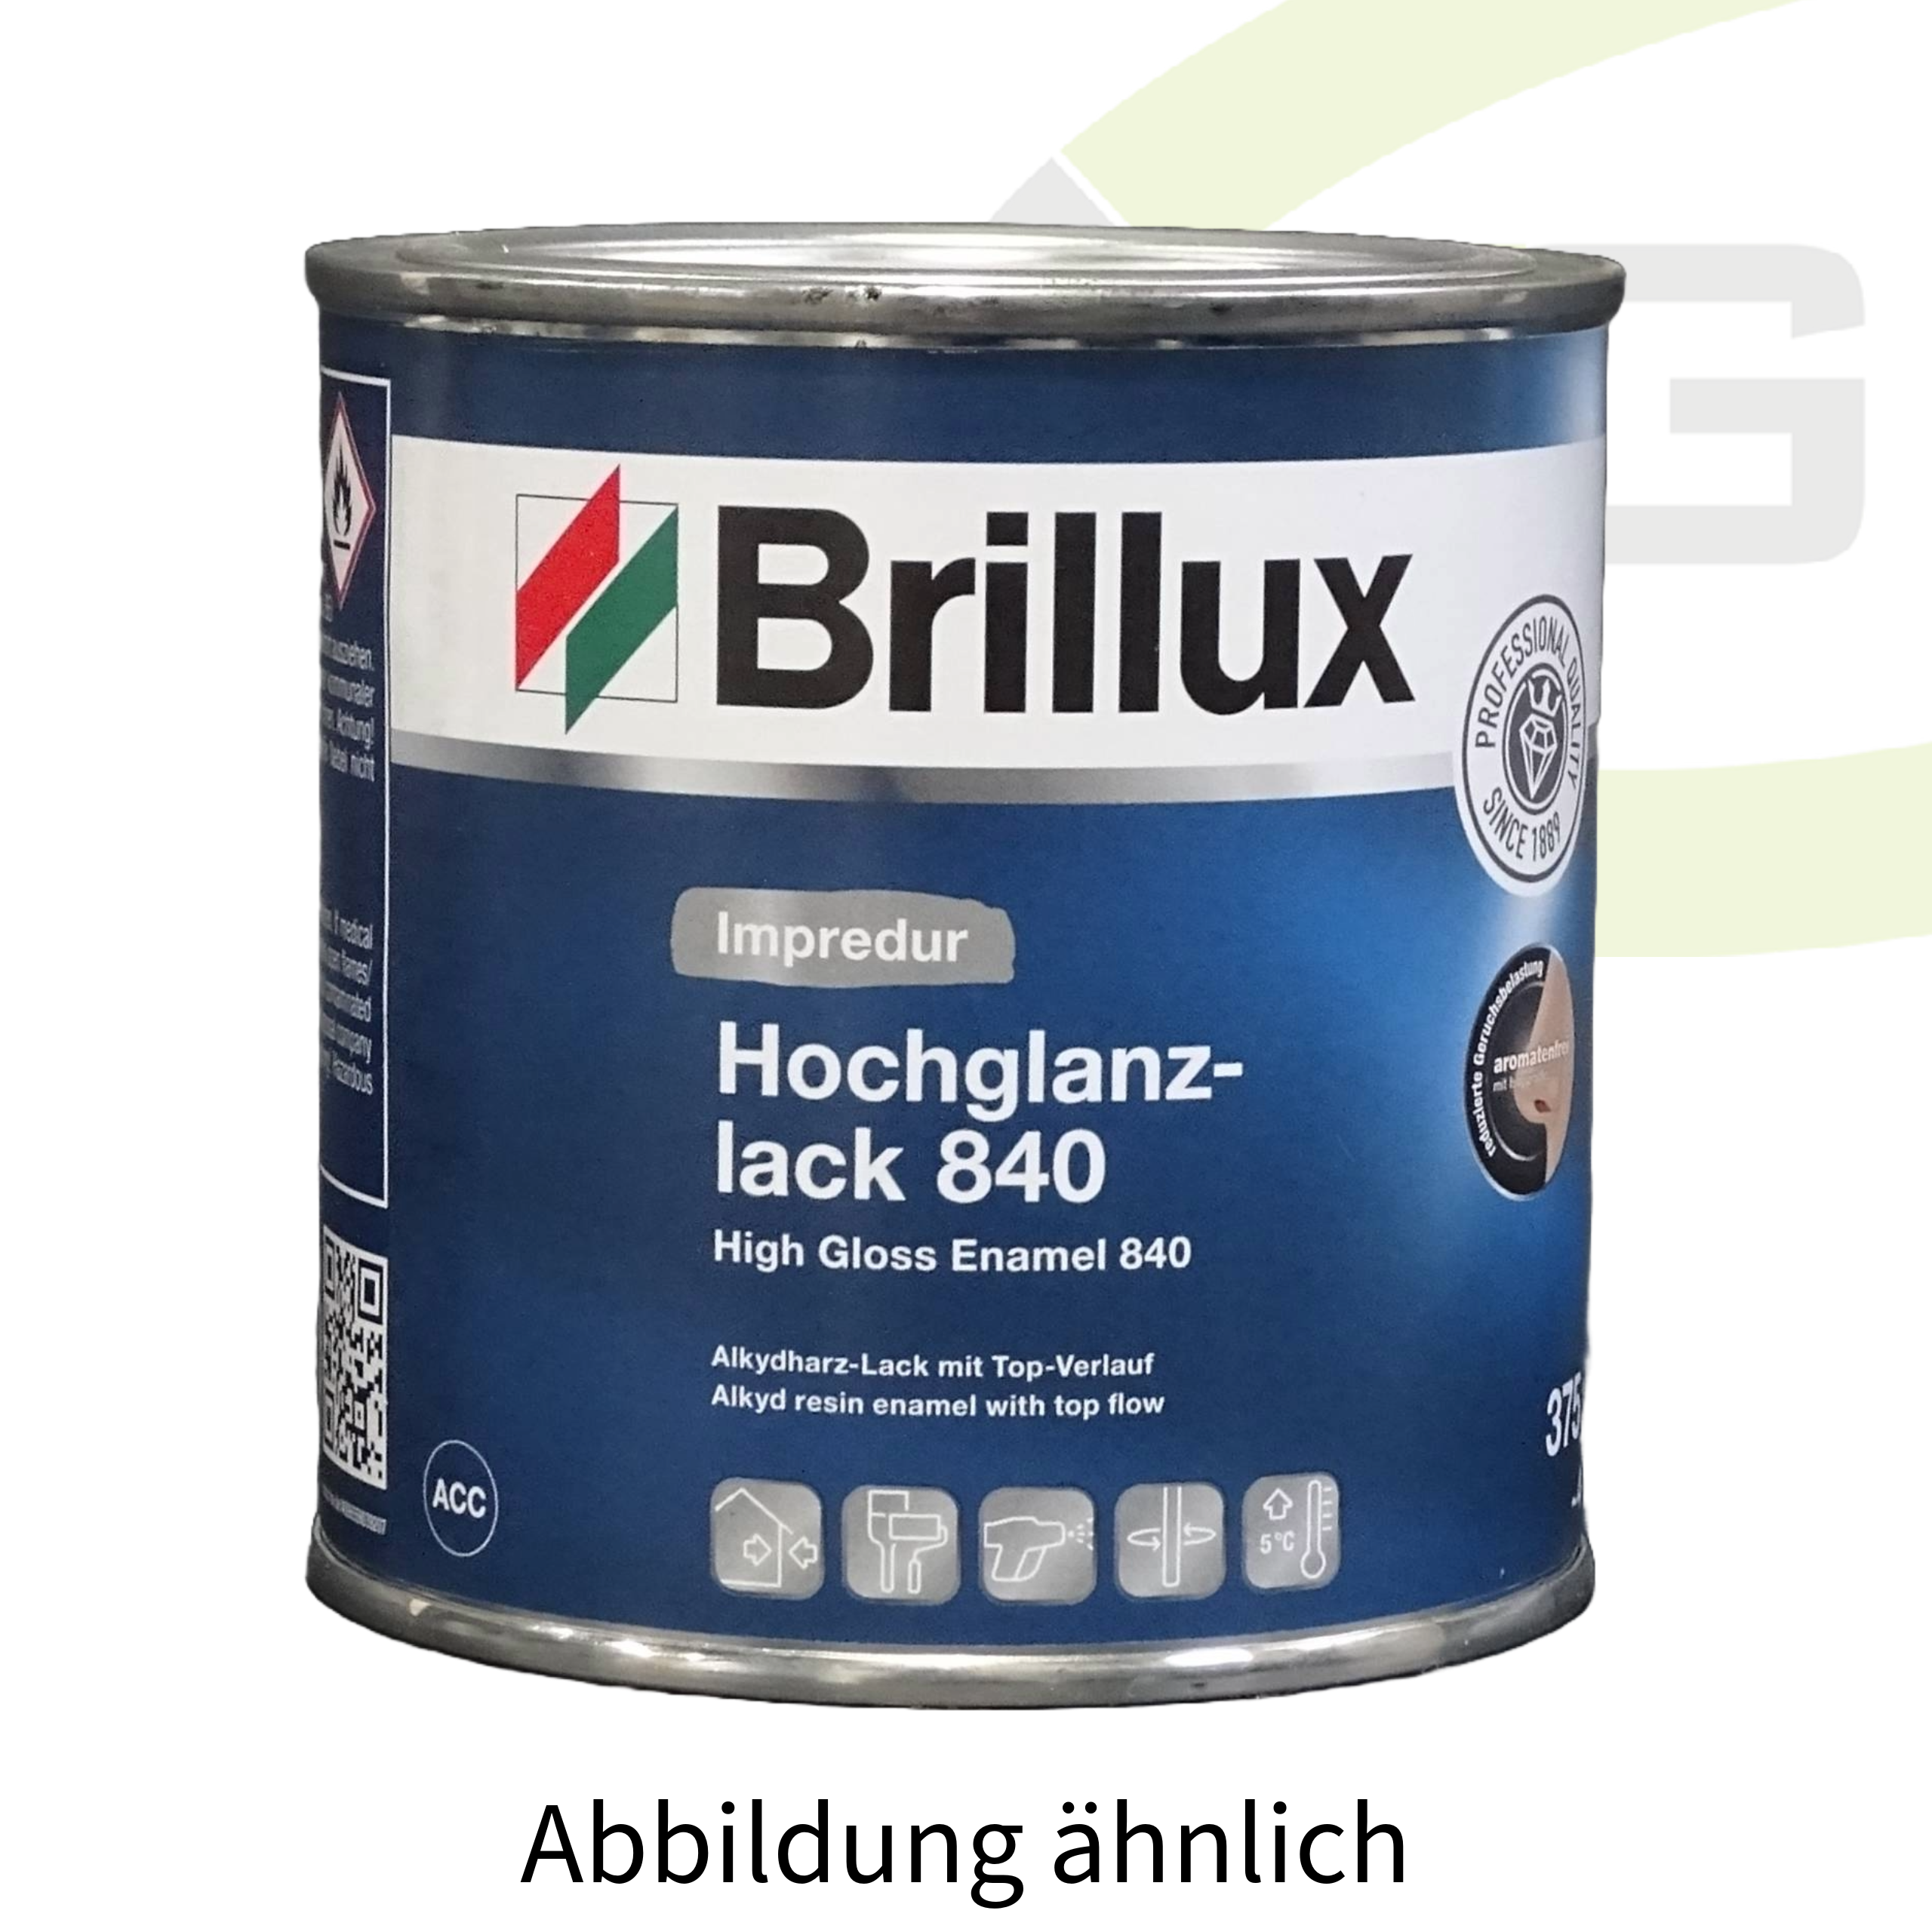 Brillux Impredur Hochglanzlack 840 - 3.00 LTR / Lösungsmittelhaltiger Endlack